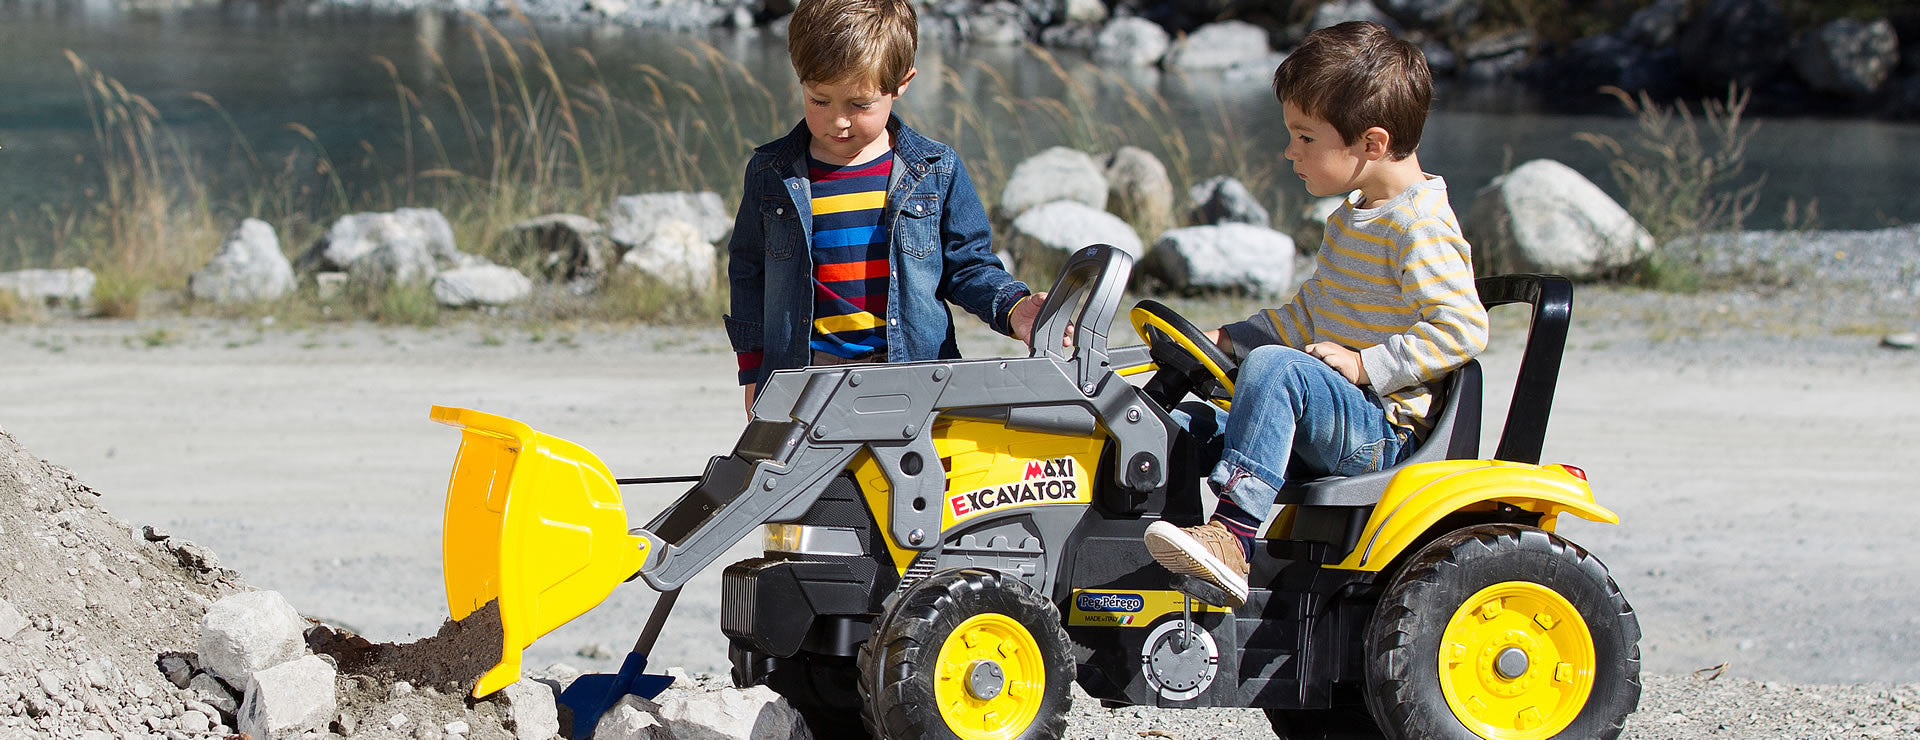 Peg Perego Maxi Excavator Pedal Powered Kids Ride-On